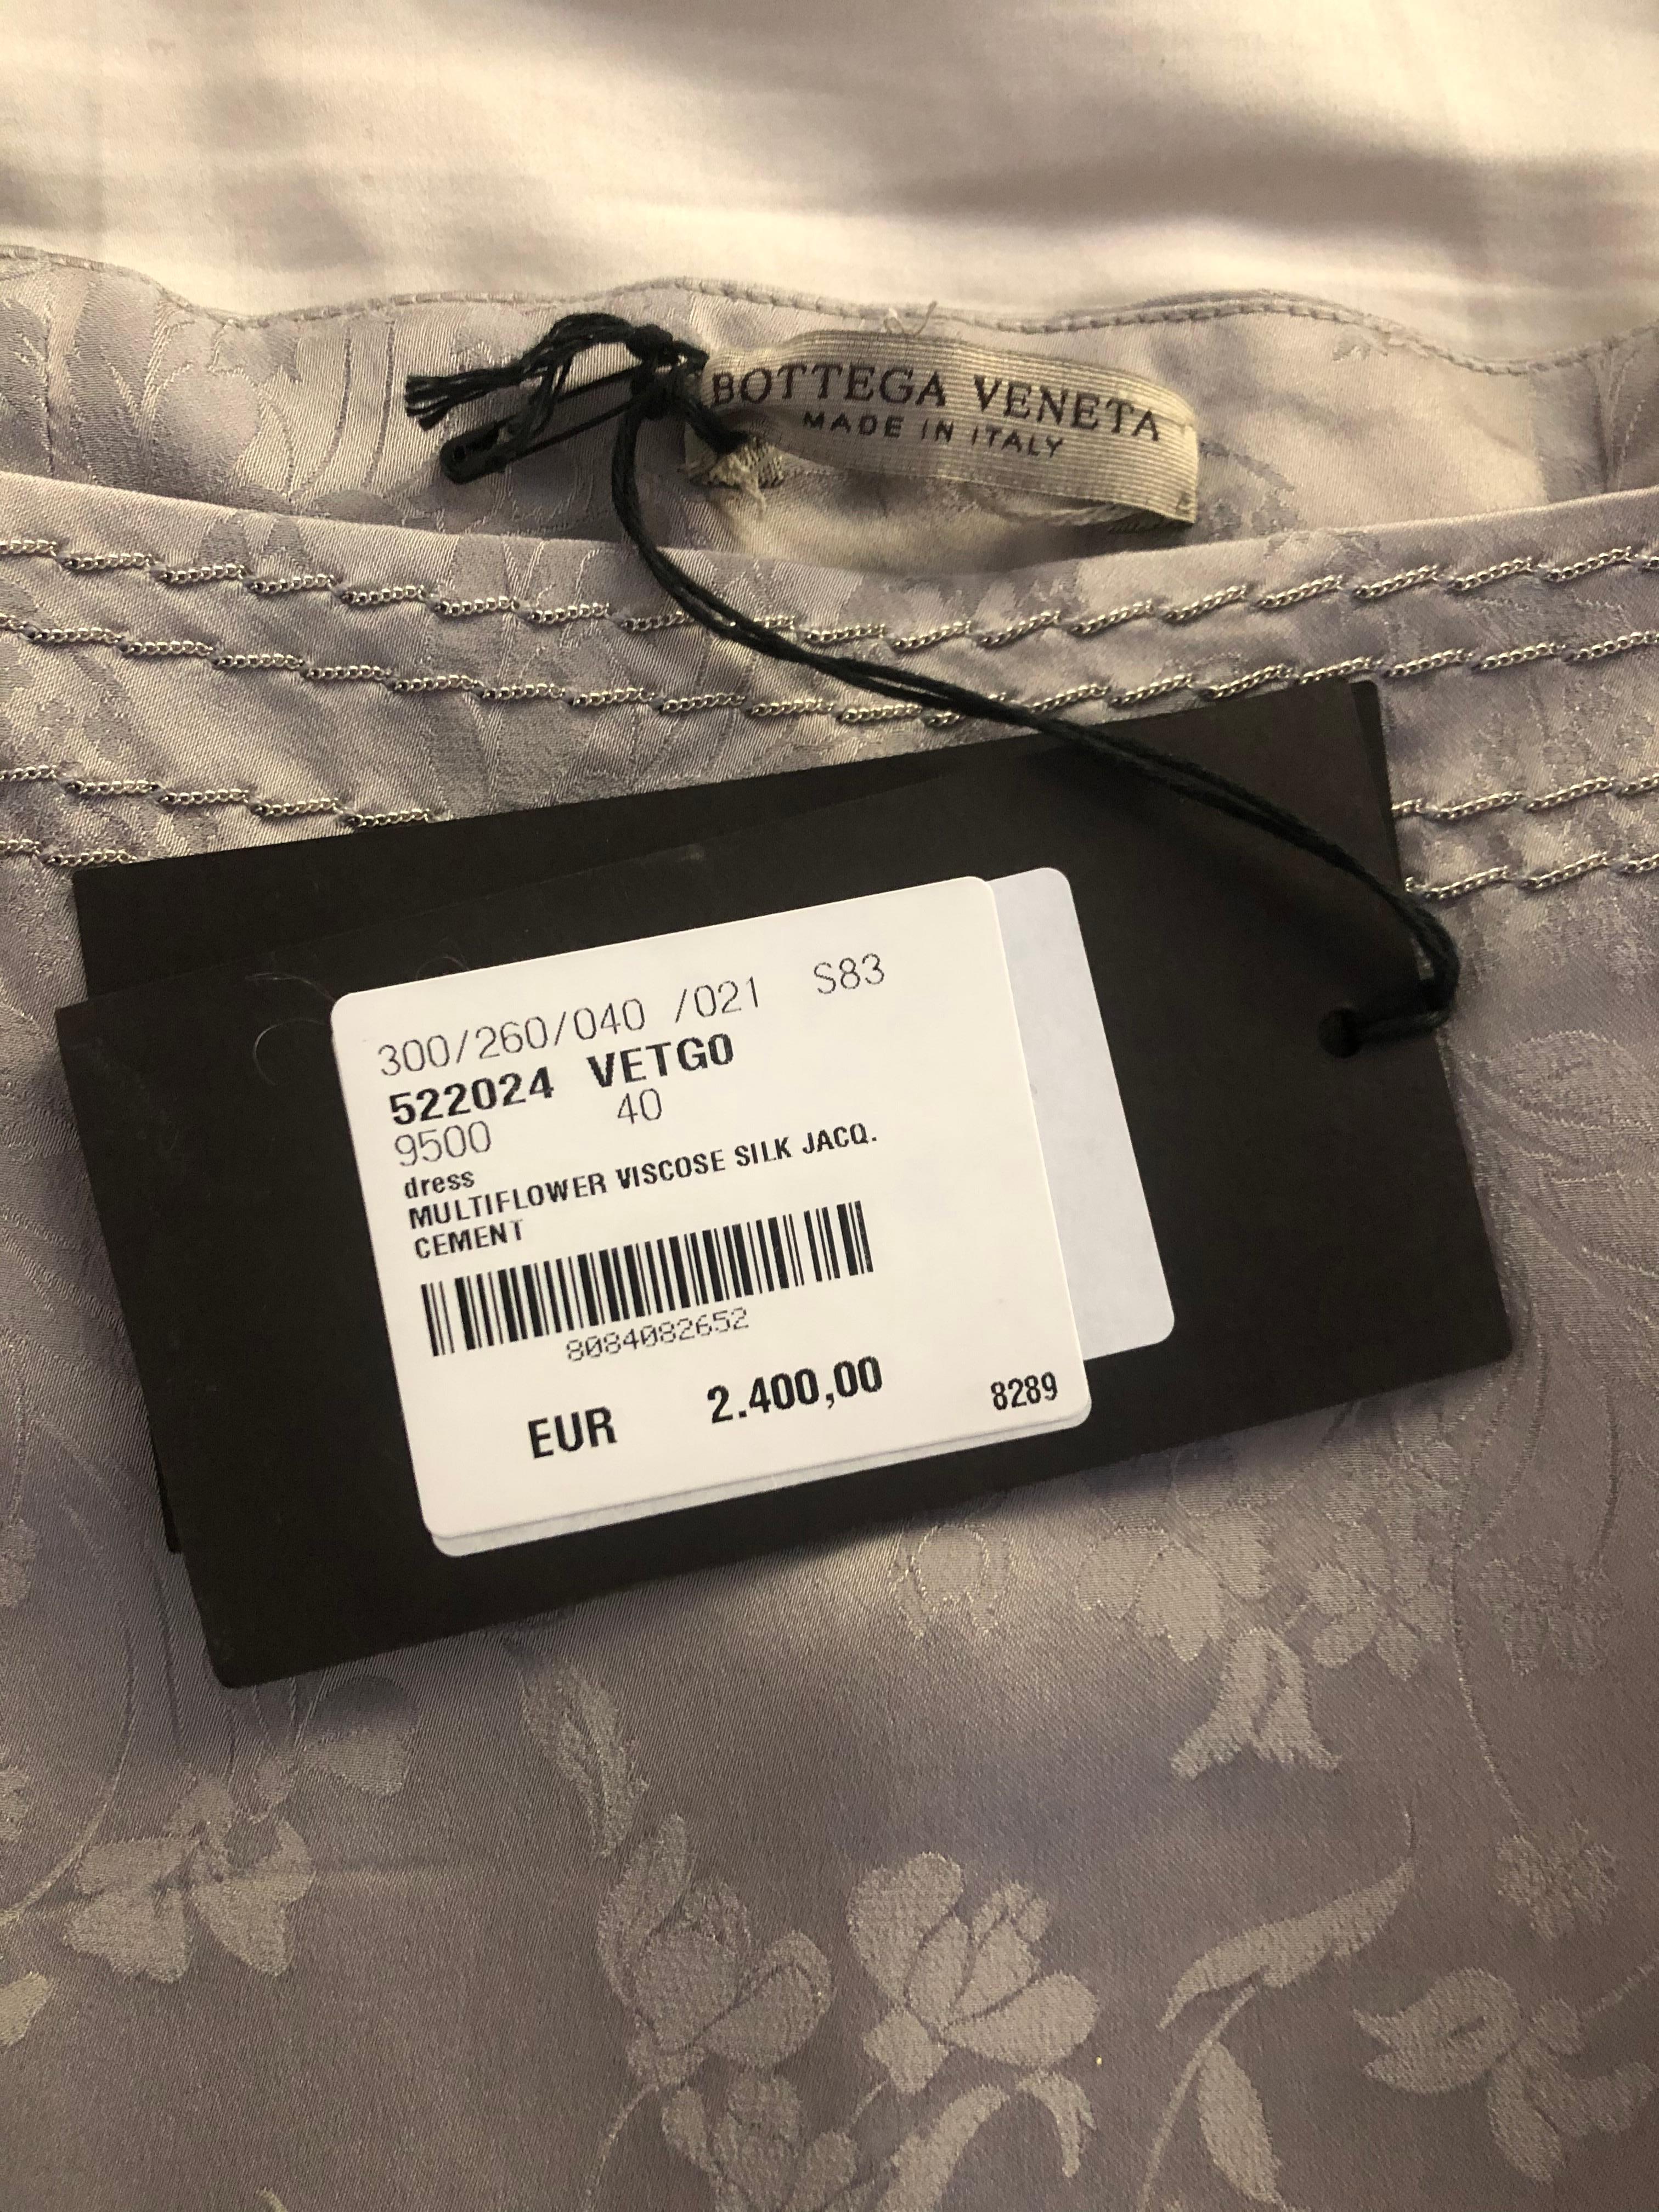 Bottega Veneta Grey Silk Multi Flower Sleeveless Dress w/ Belt Size 40 7